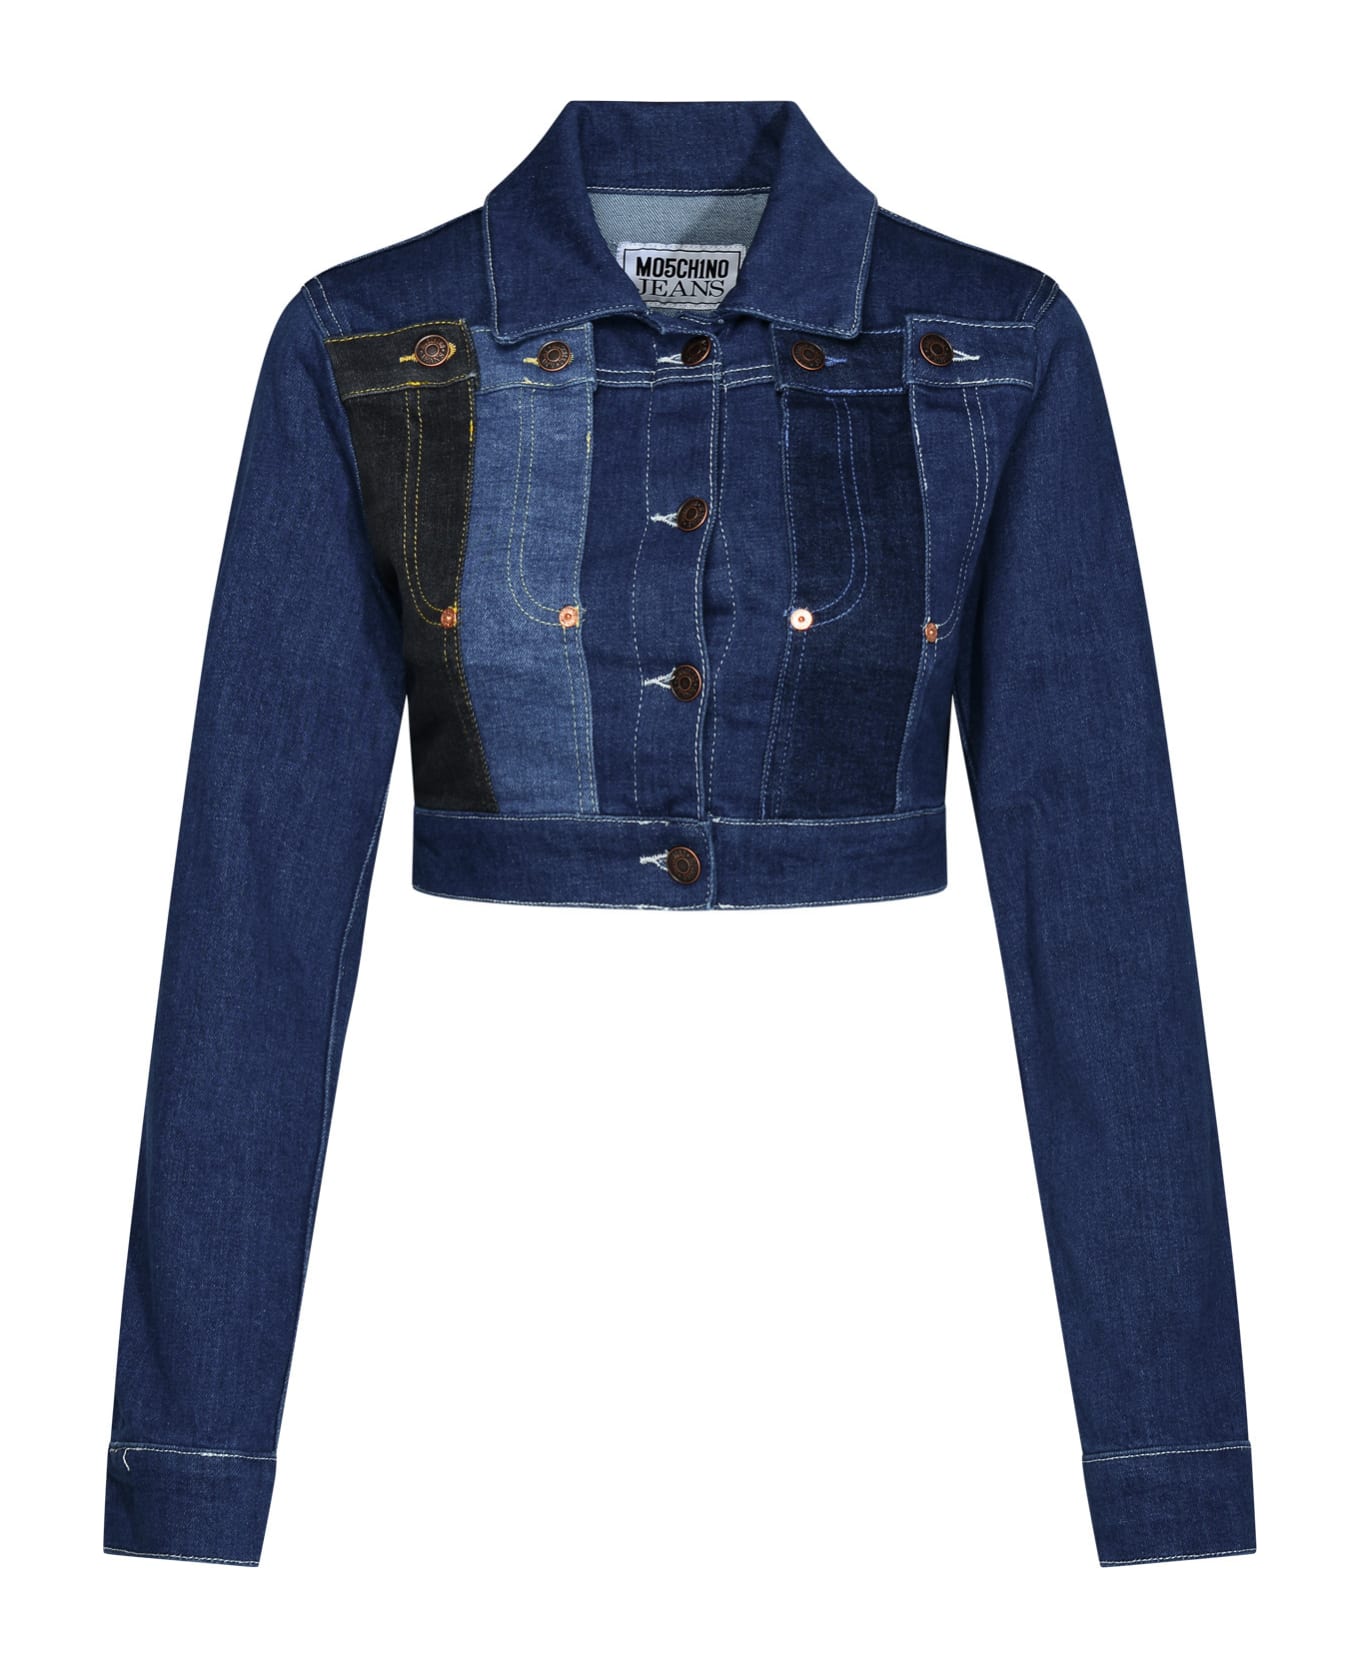 M05CH1N0 Jeans Blue Cotton Jacket - Blu denim